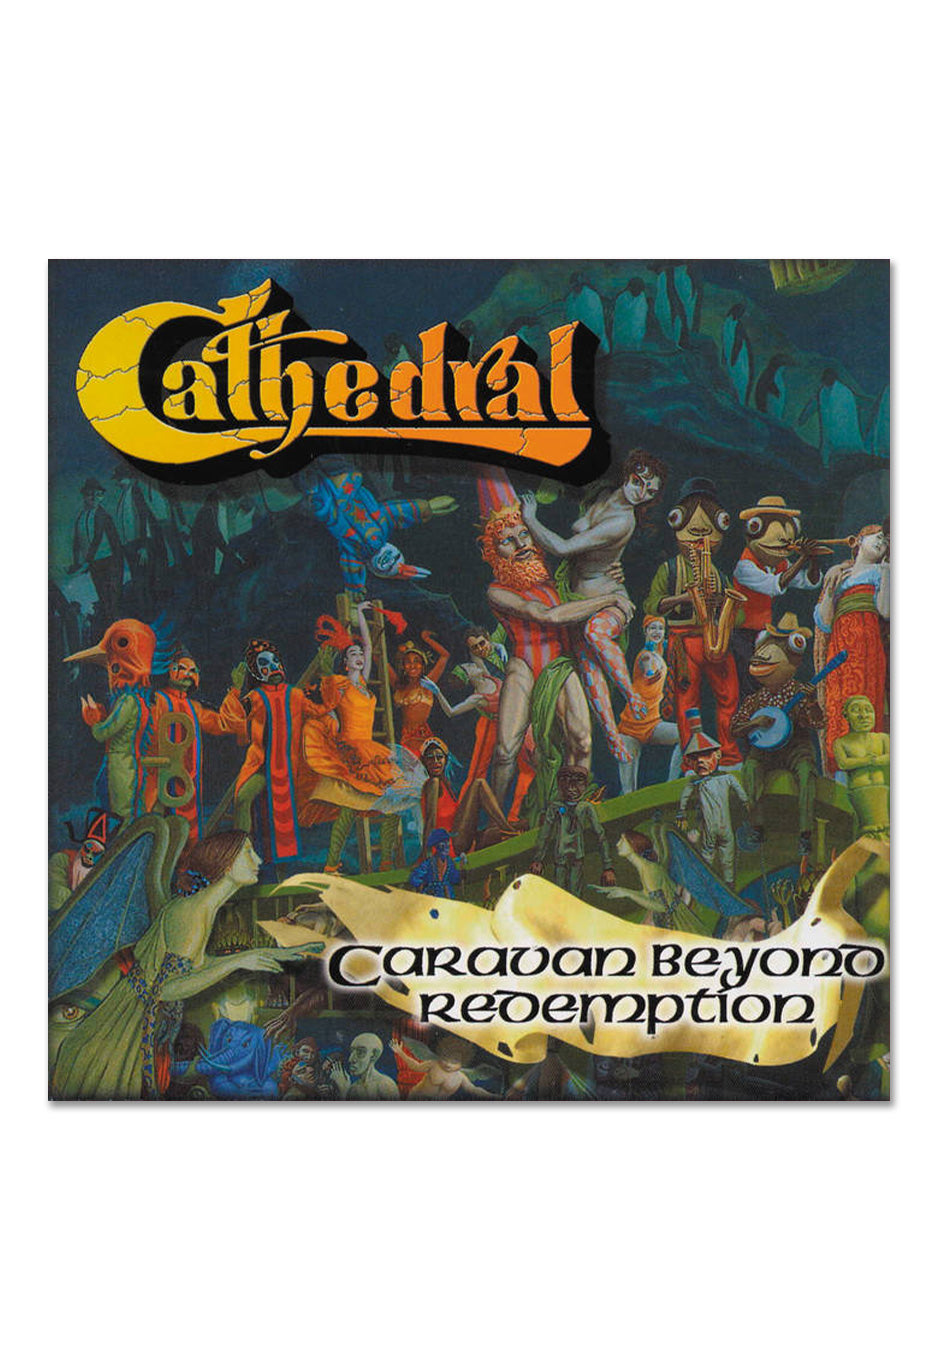 Cathedral - Caravan Beyond Redemption - 2 Vinyl | Neutral-Image